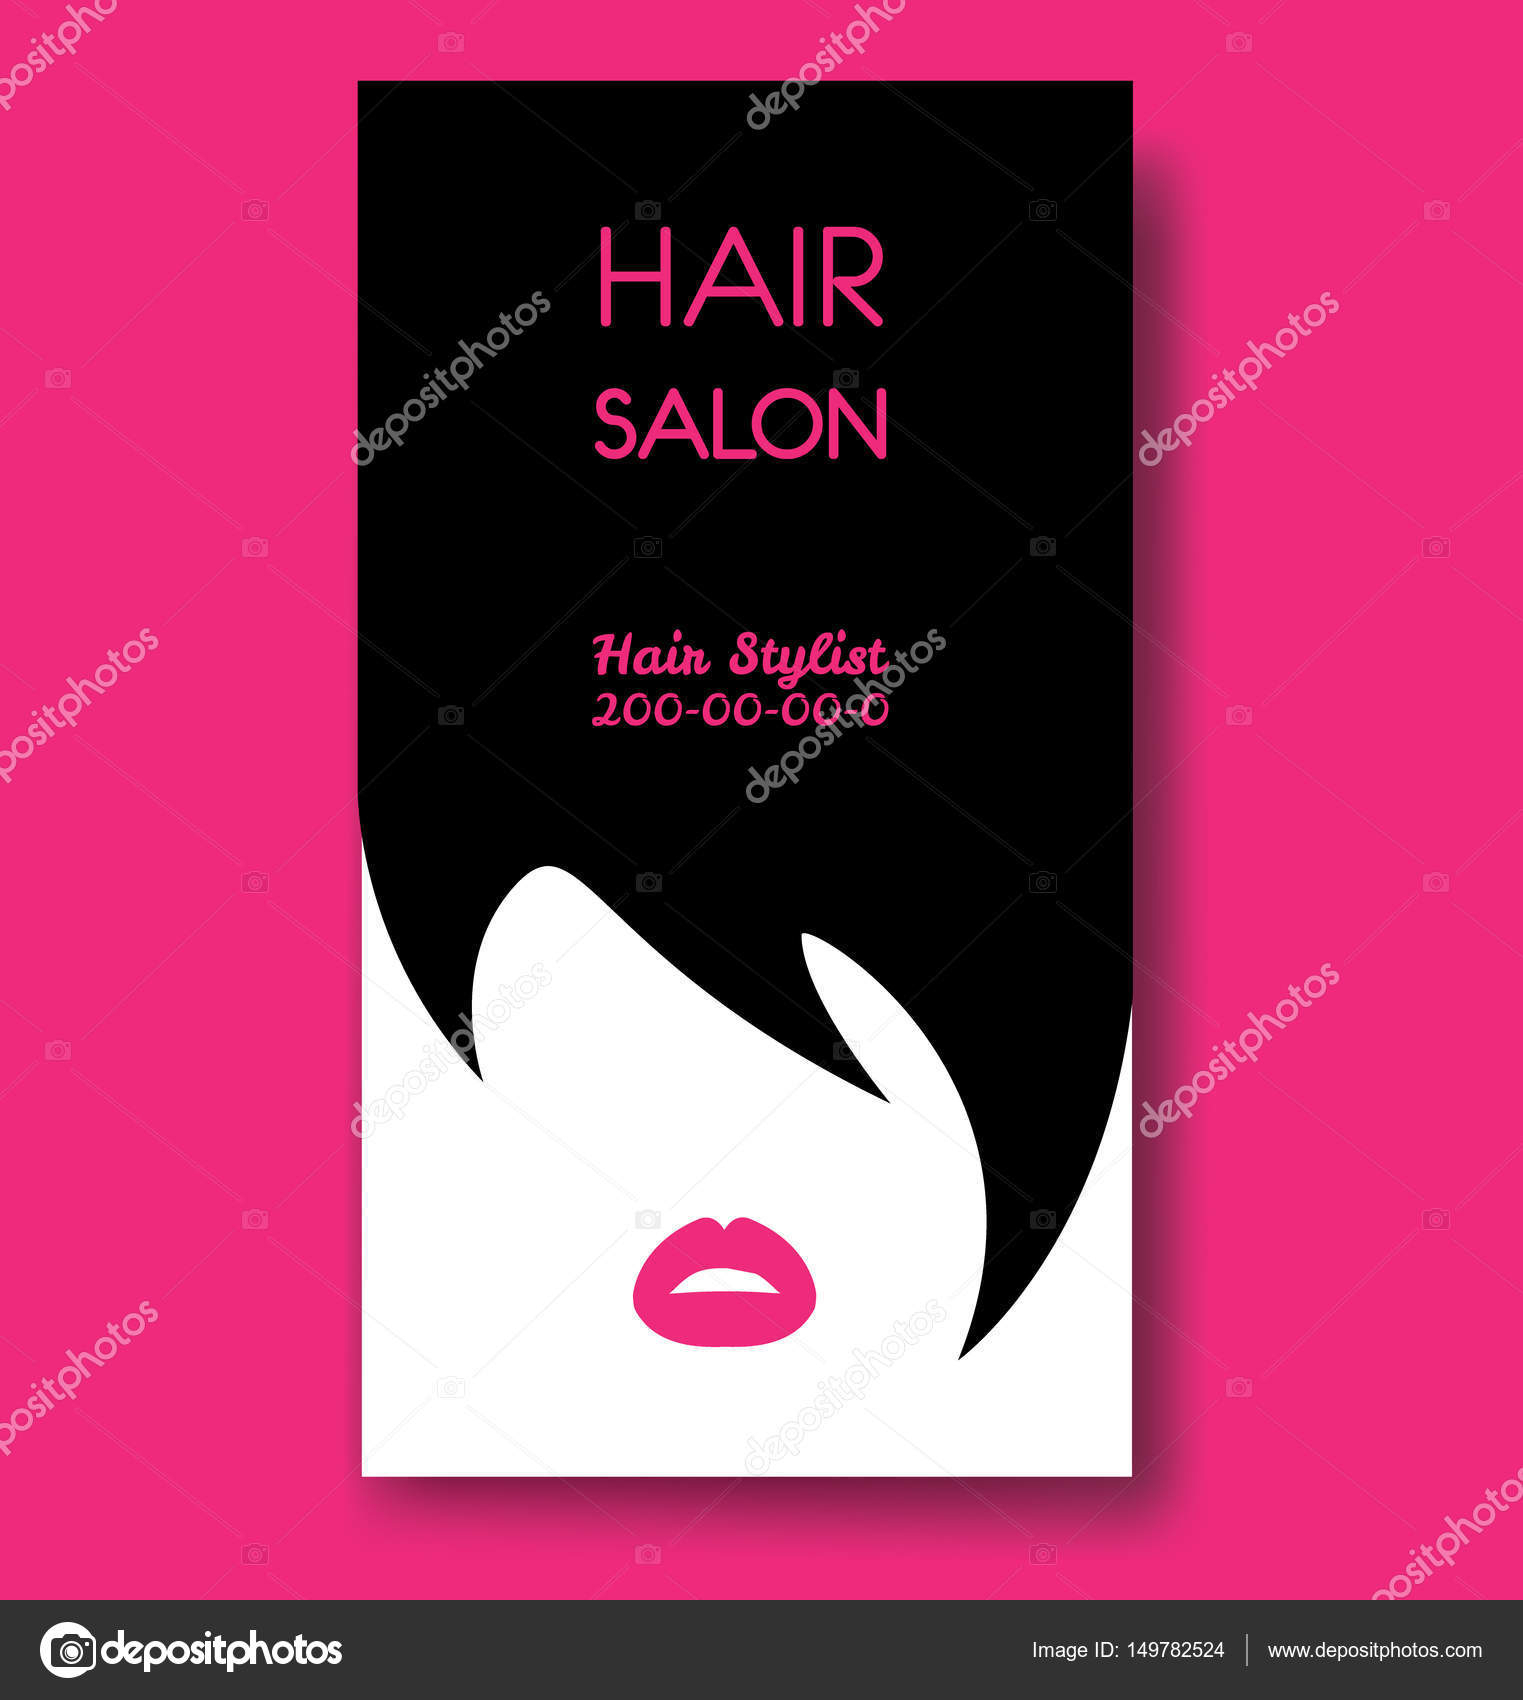 Hair Stylist Business Cards Examples | Hair Salon Business Regarding Hair Salon Business Card Template